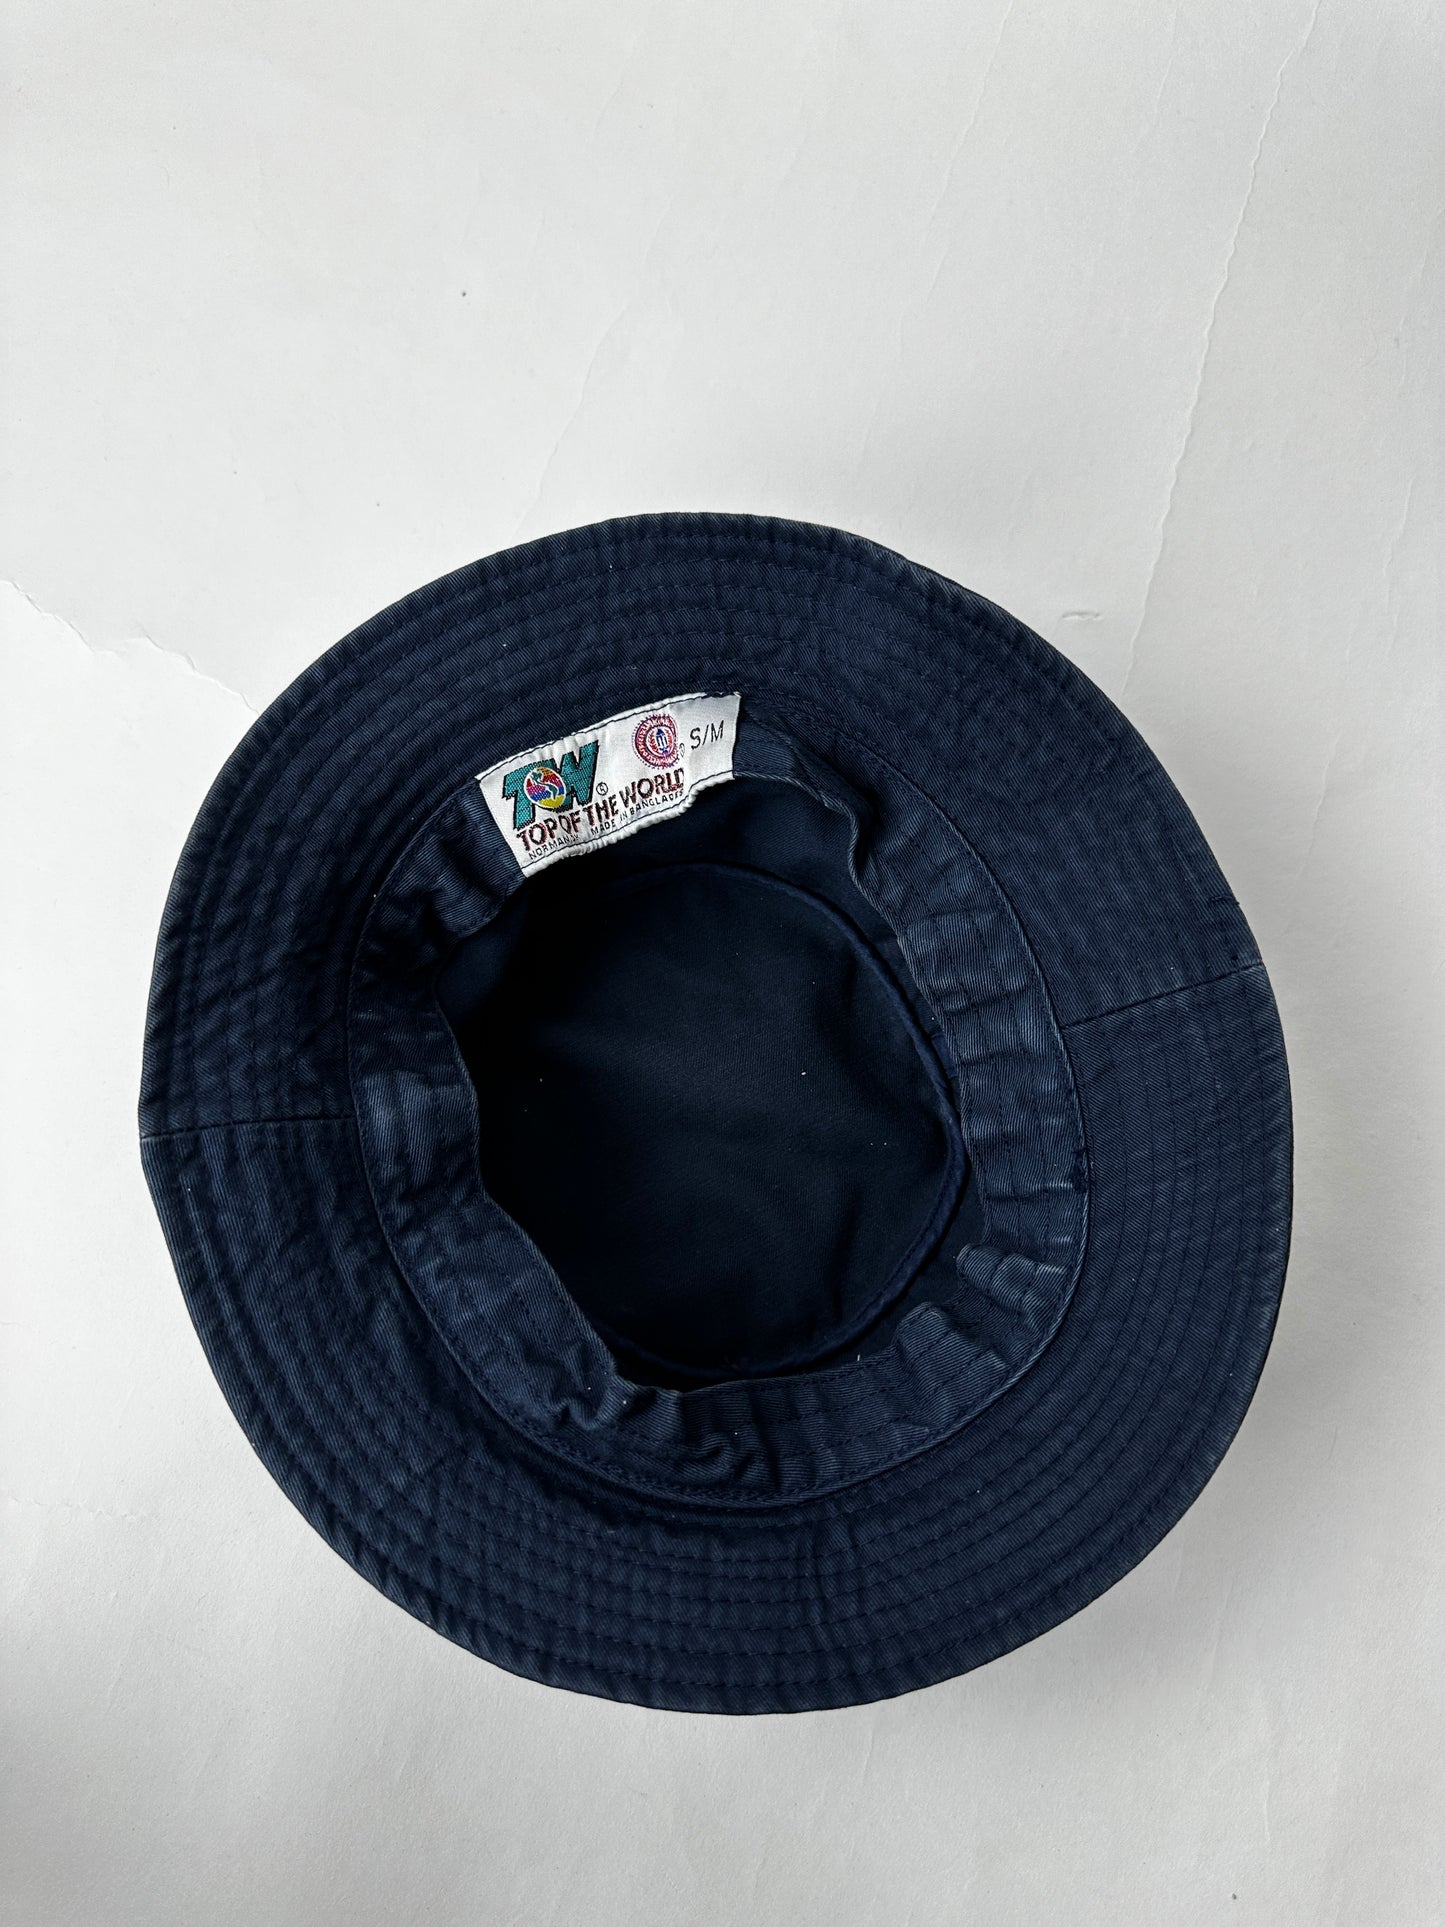 Vintage Michigan Wolverines Bucket Hat Cap Adult S/M Blue College